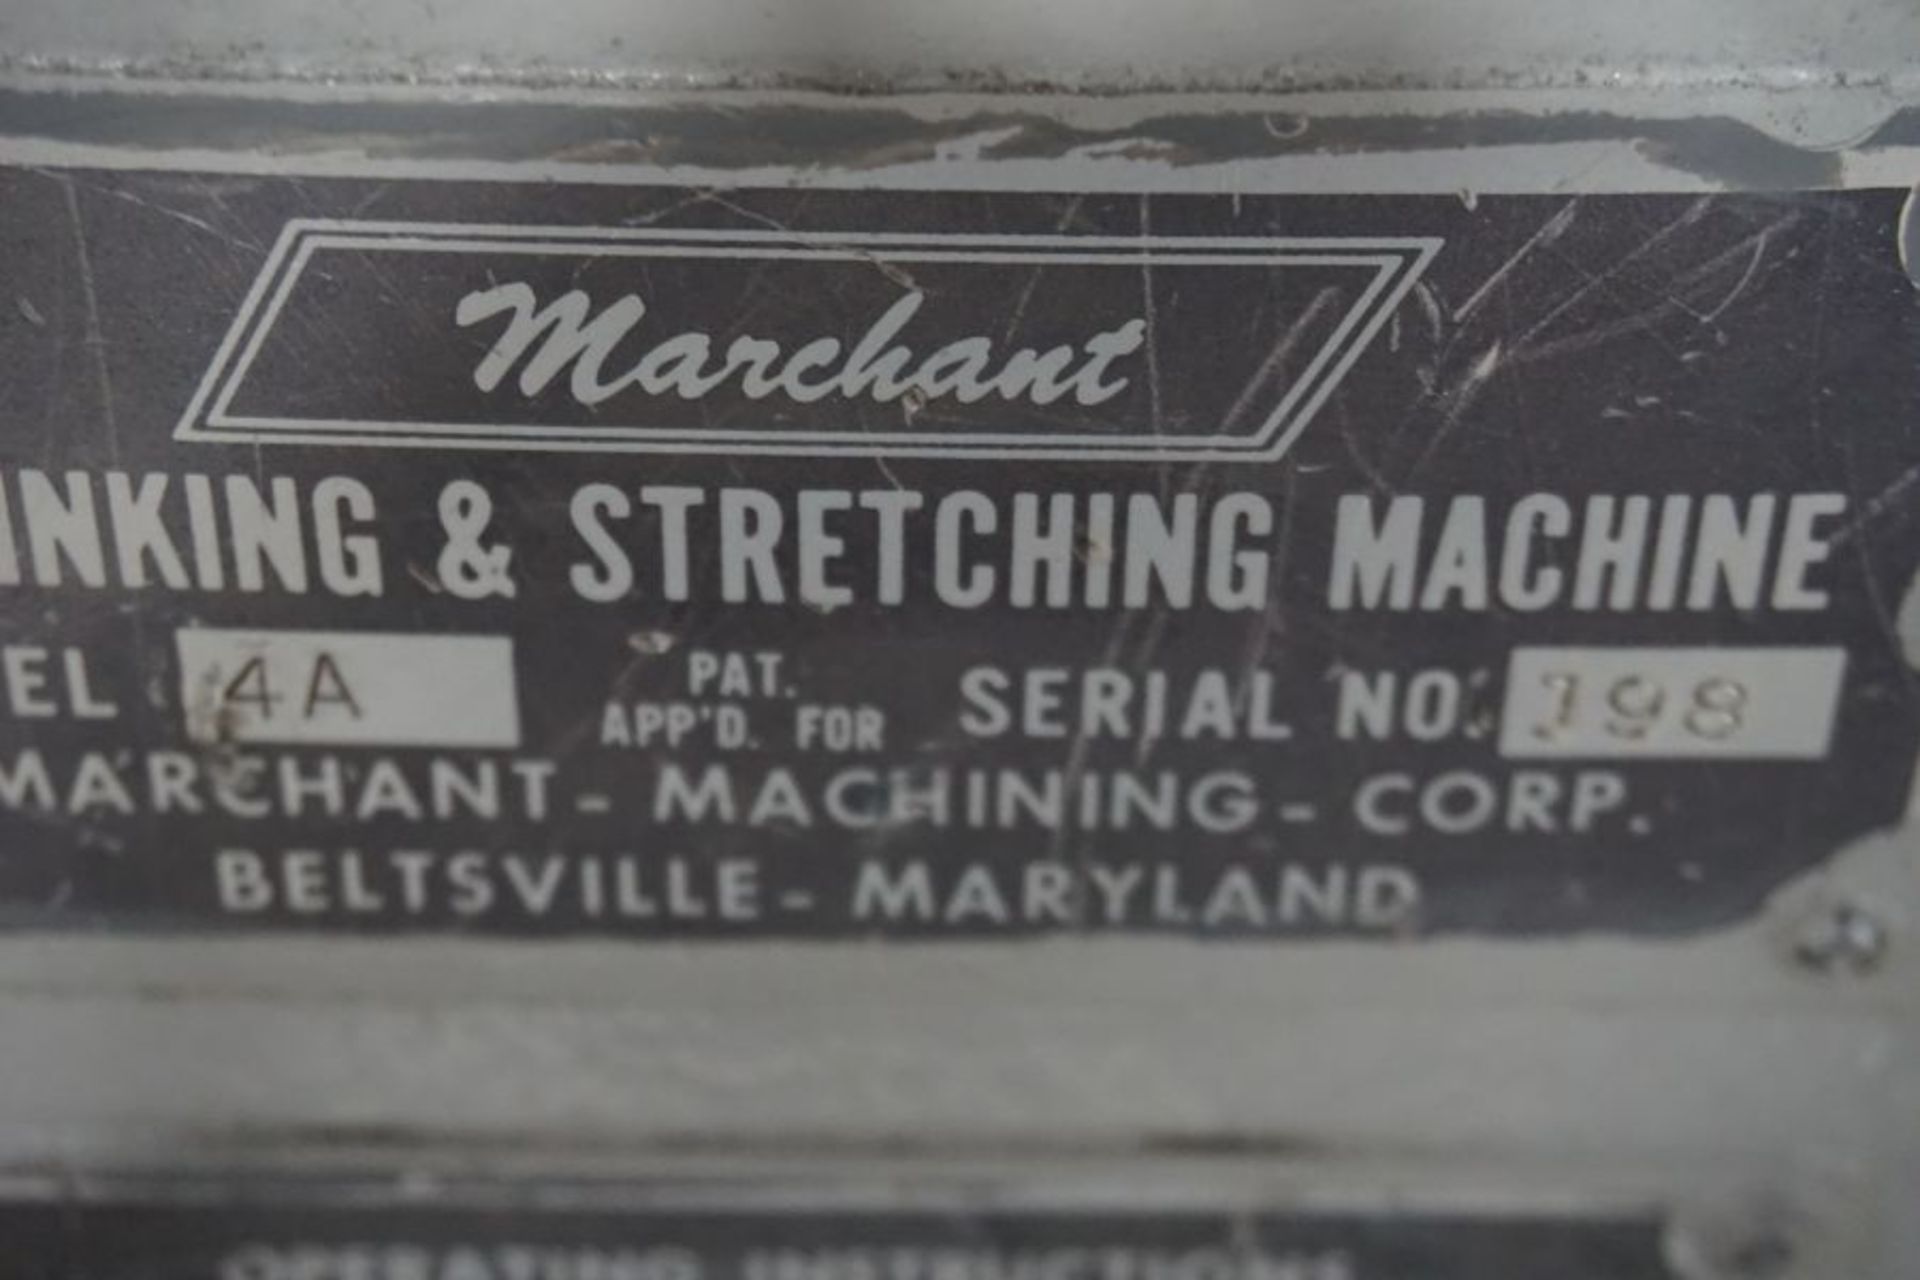 Marchant Shrinking & Streaching Machine m/n 4 A s/n 198 - Image 3 of 3